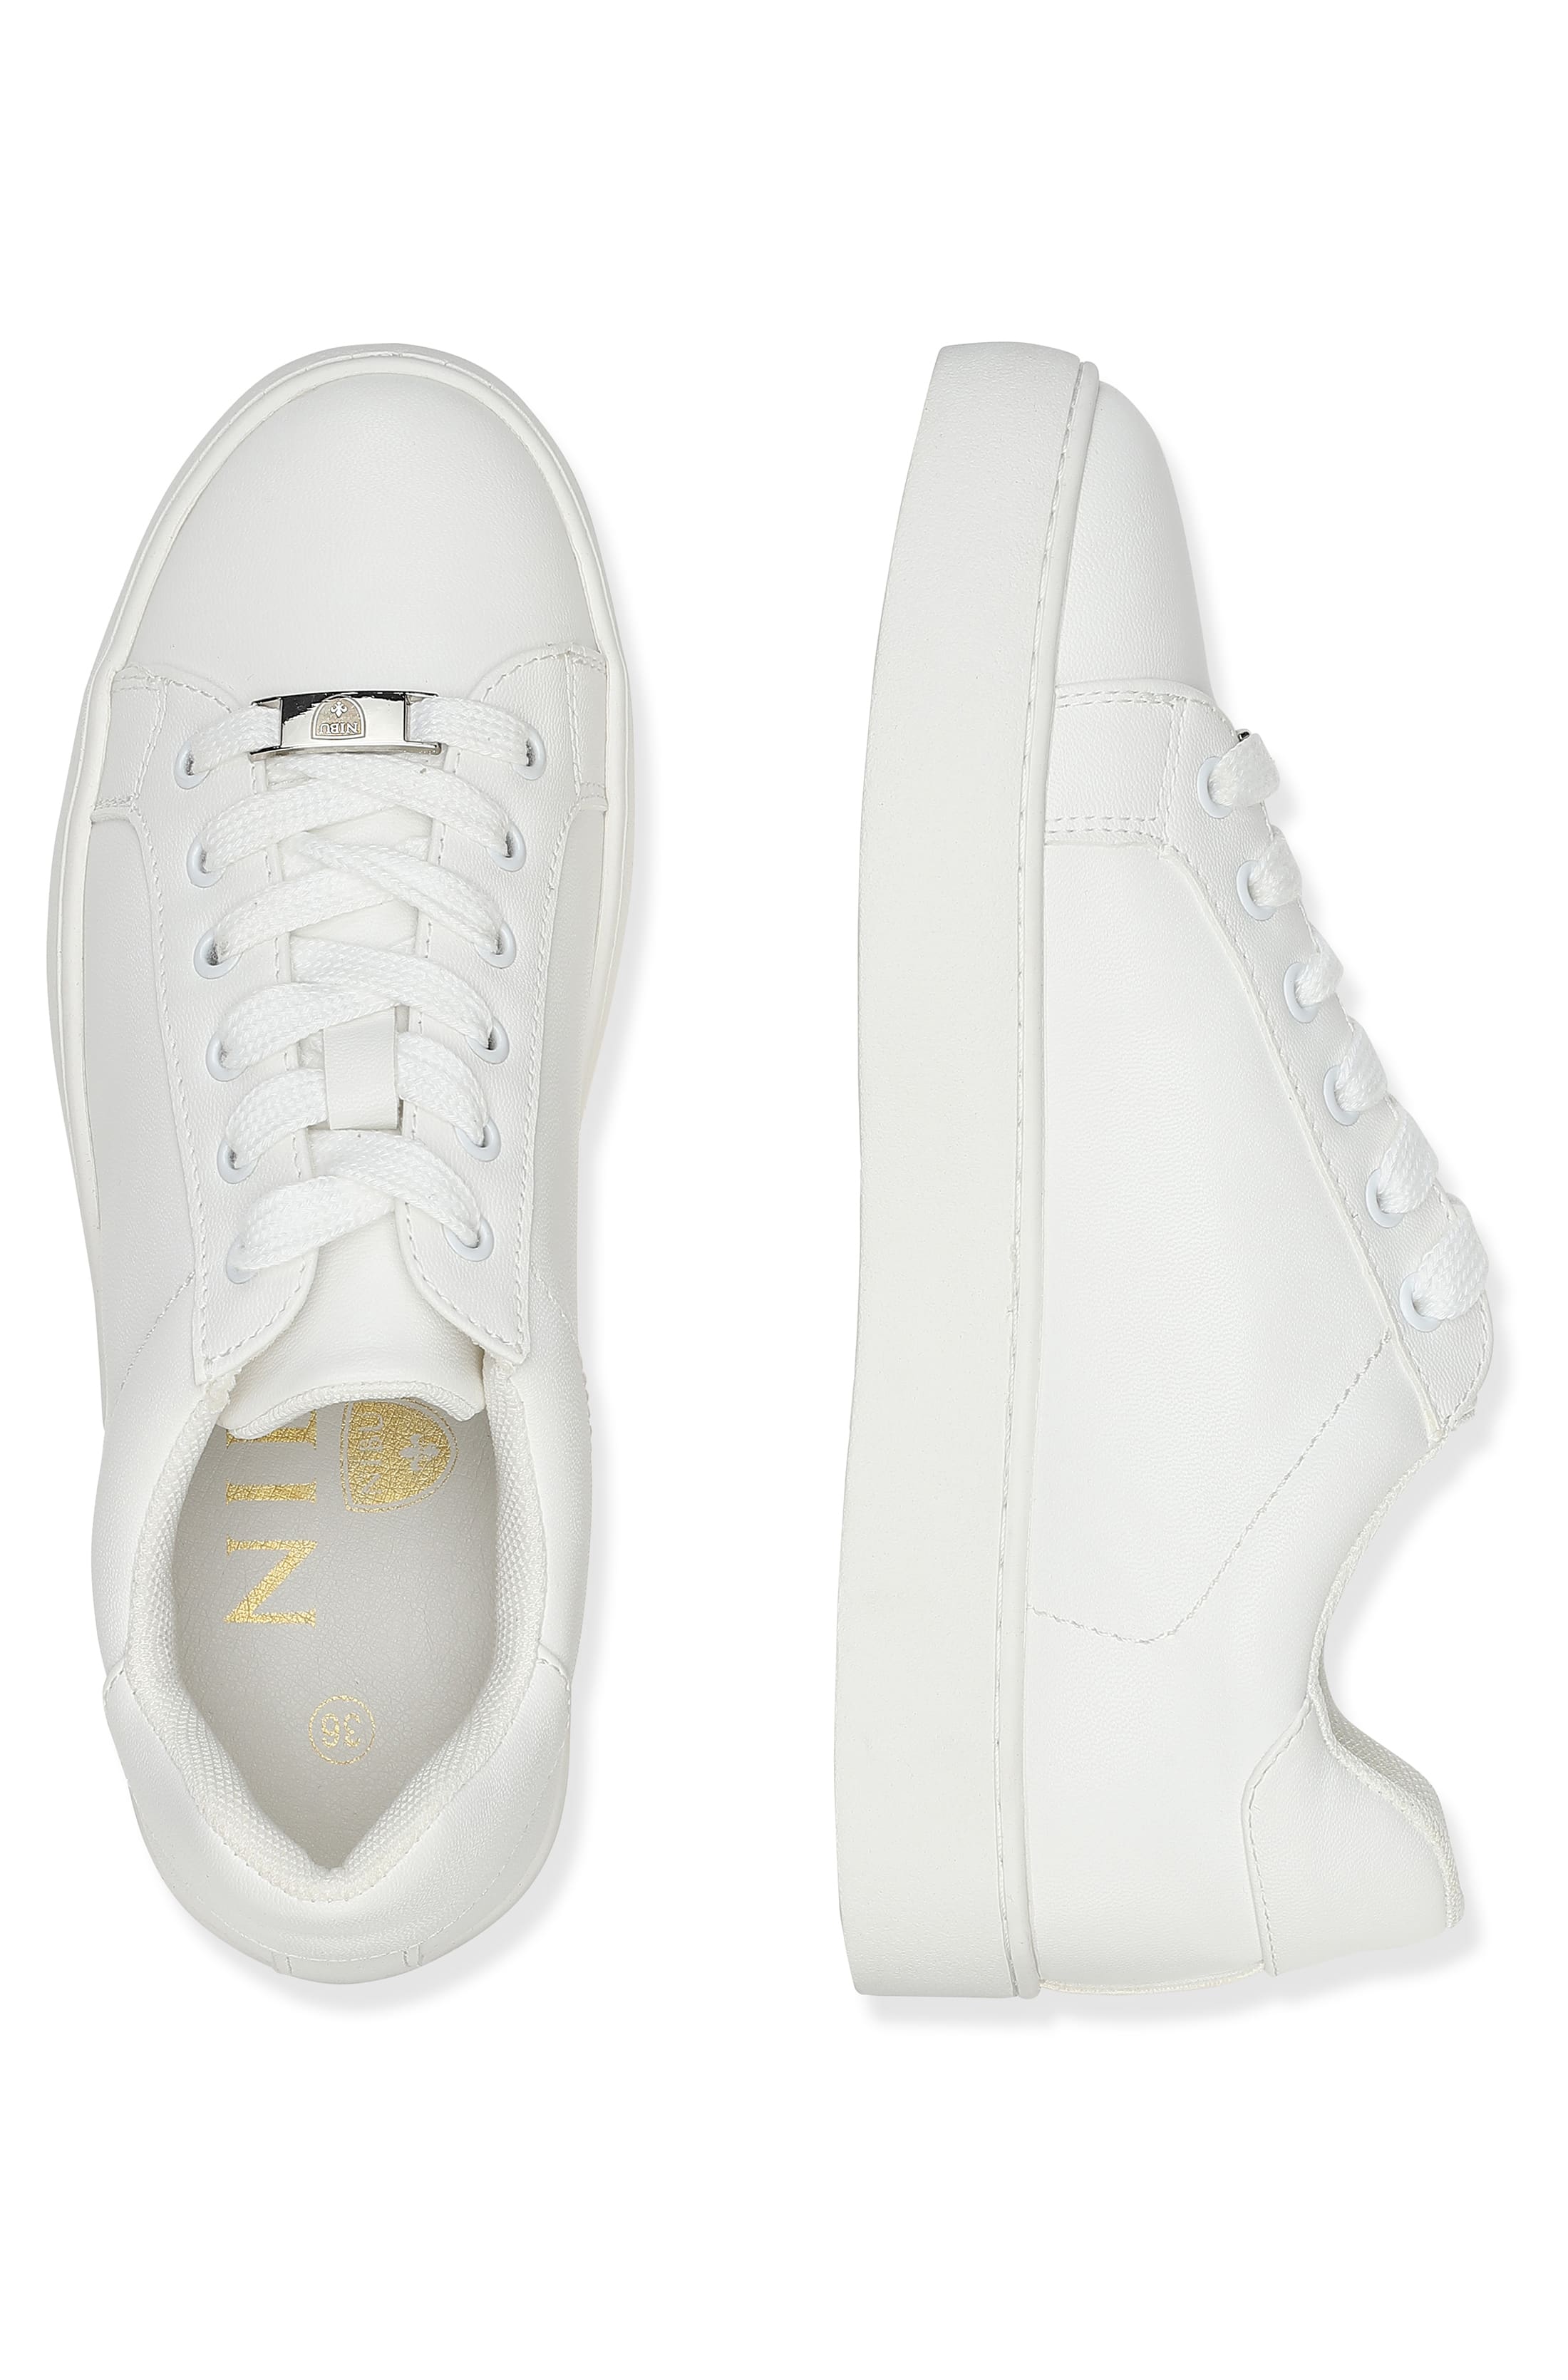 beautiful white shoes